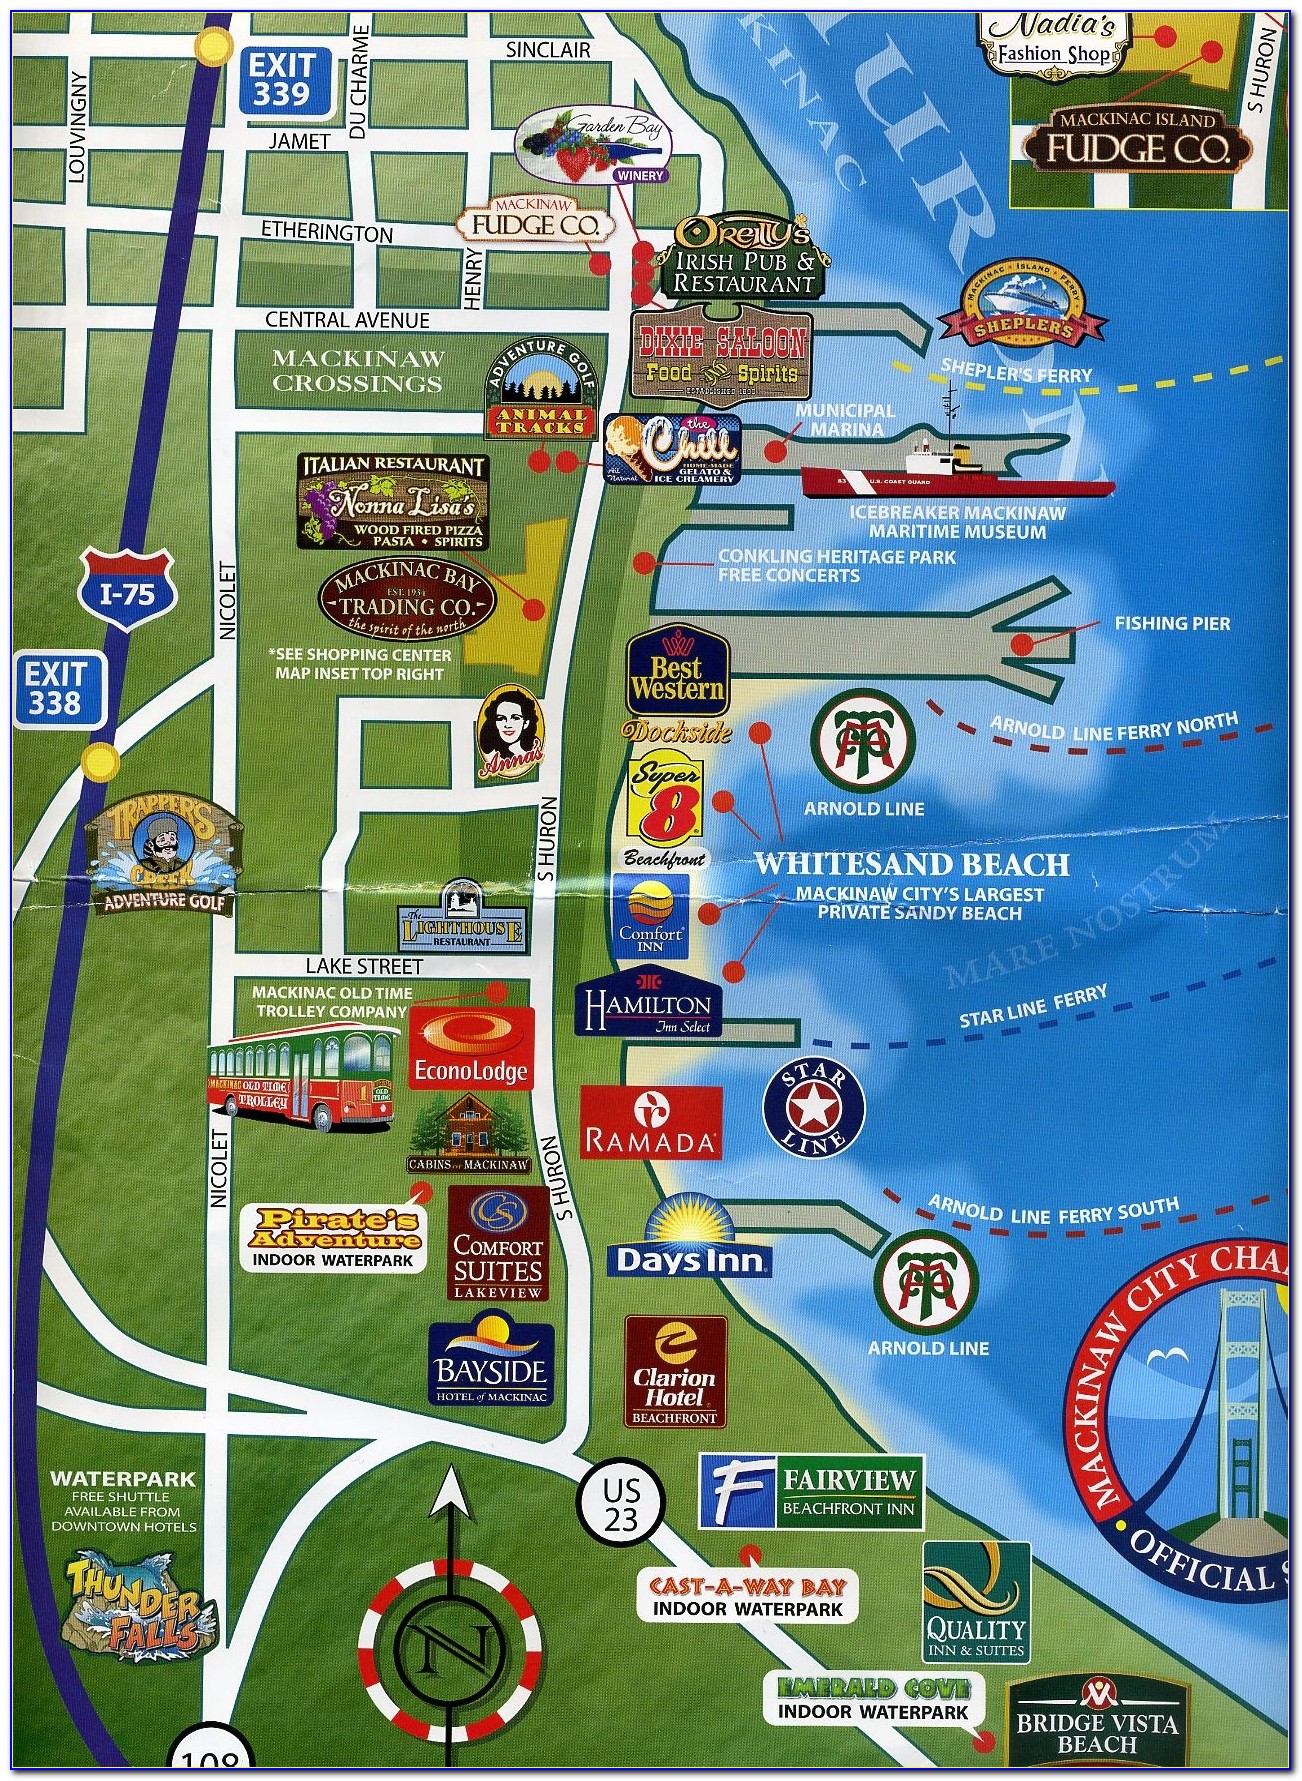 Mackinaw City Map Of Hotels